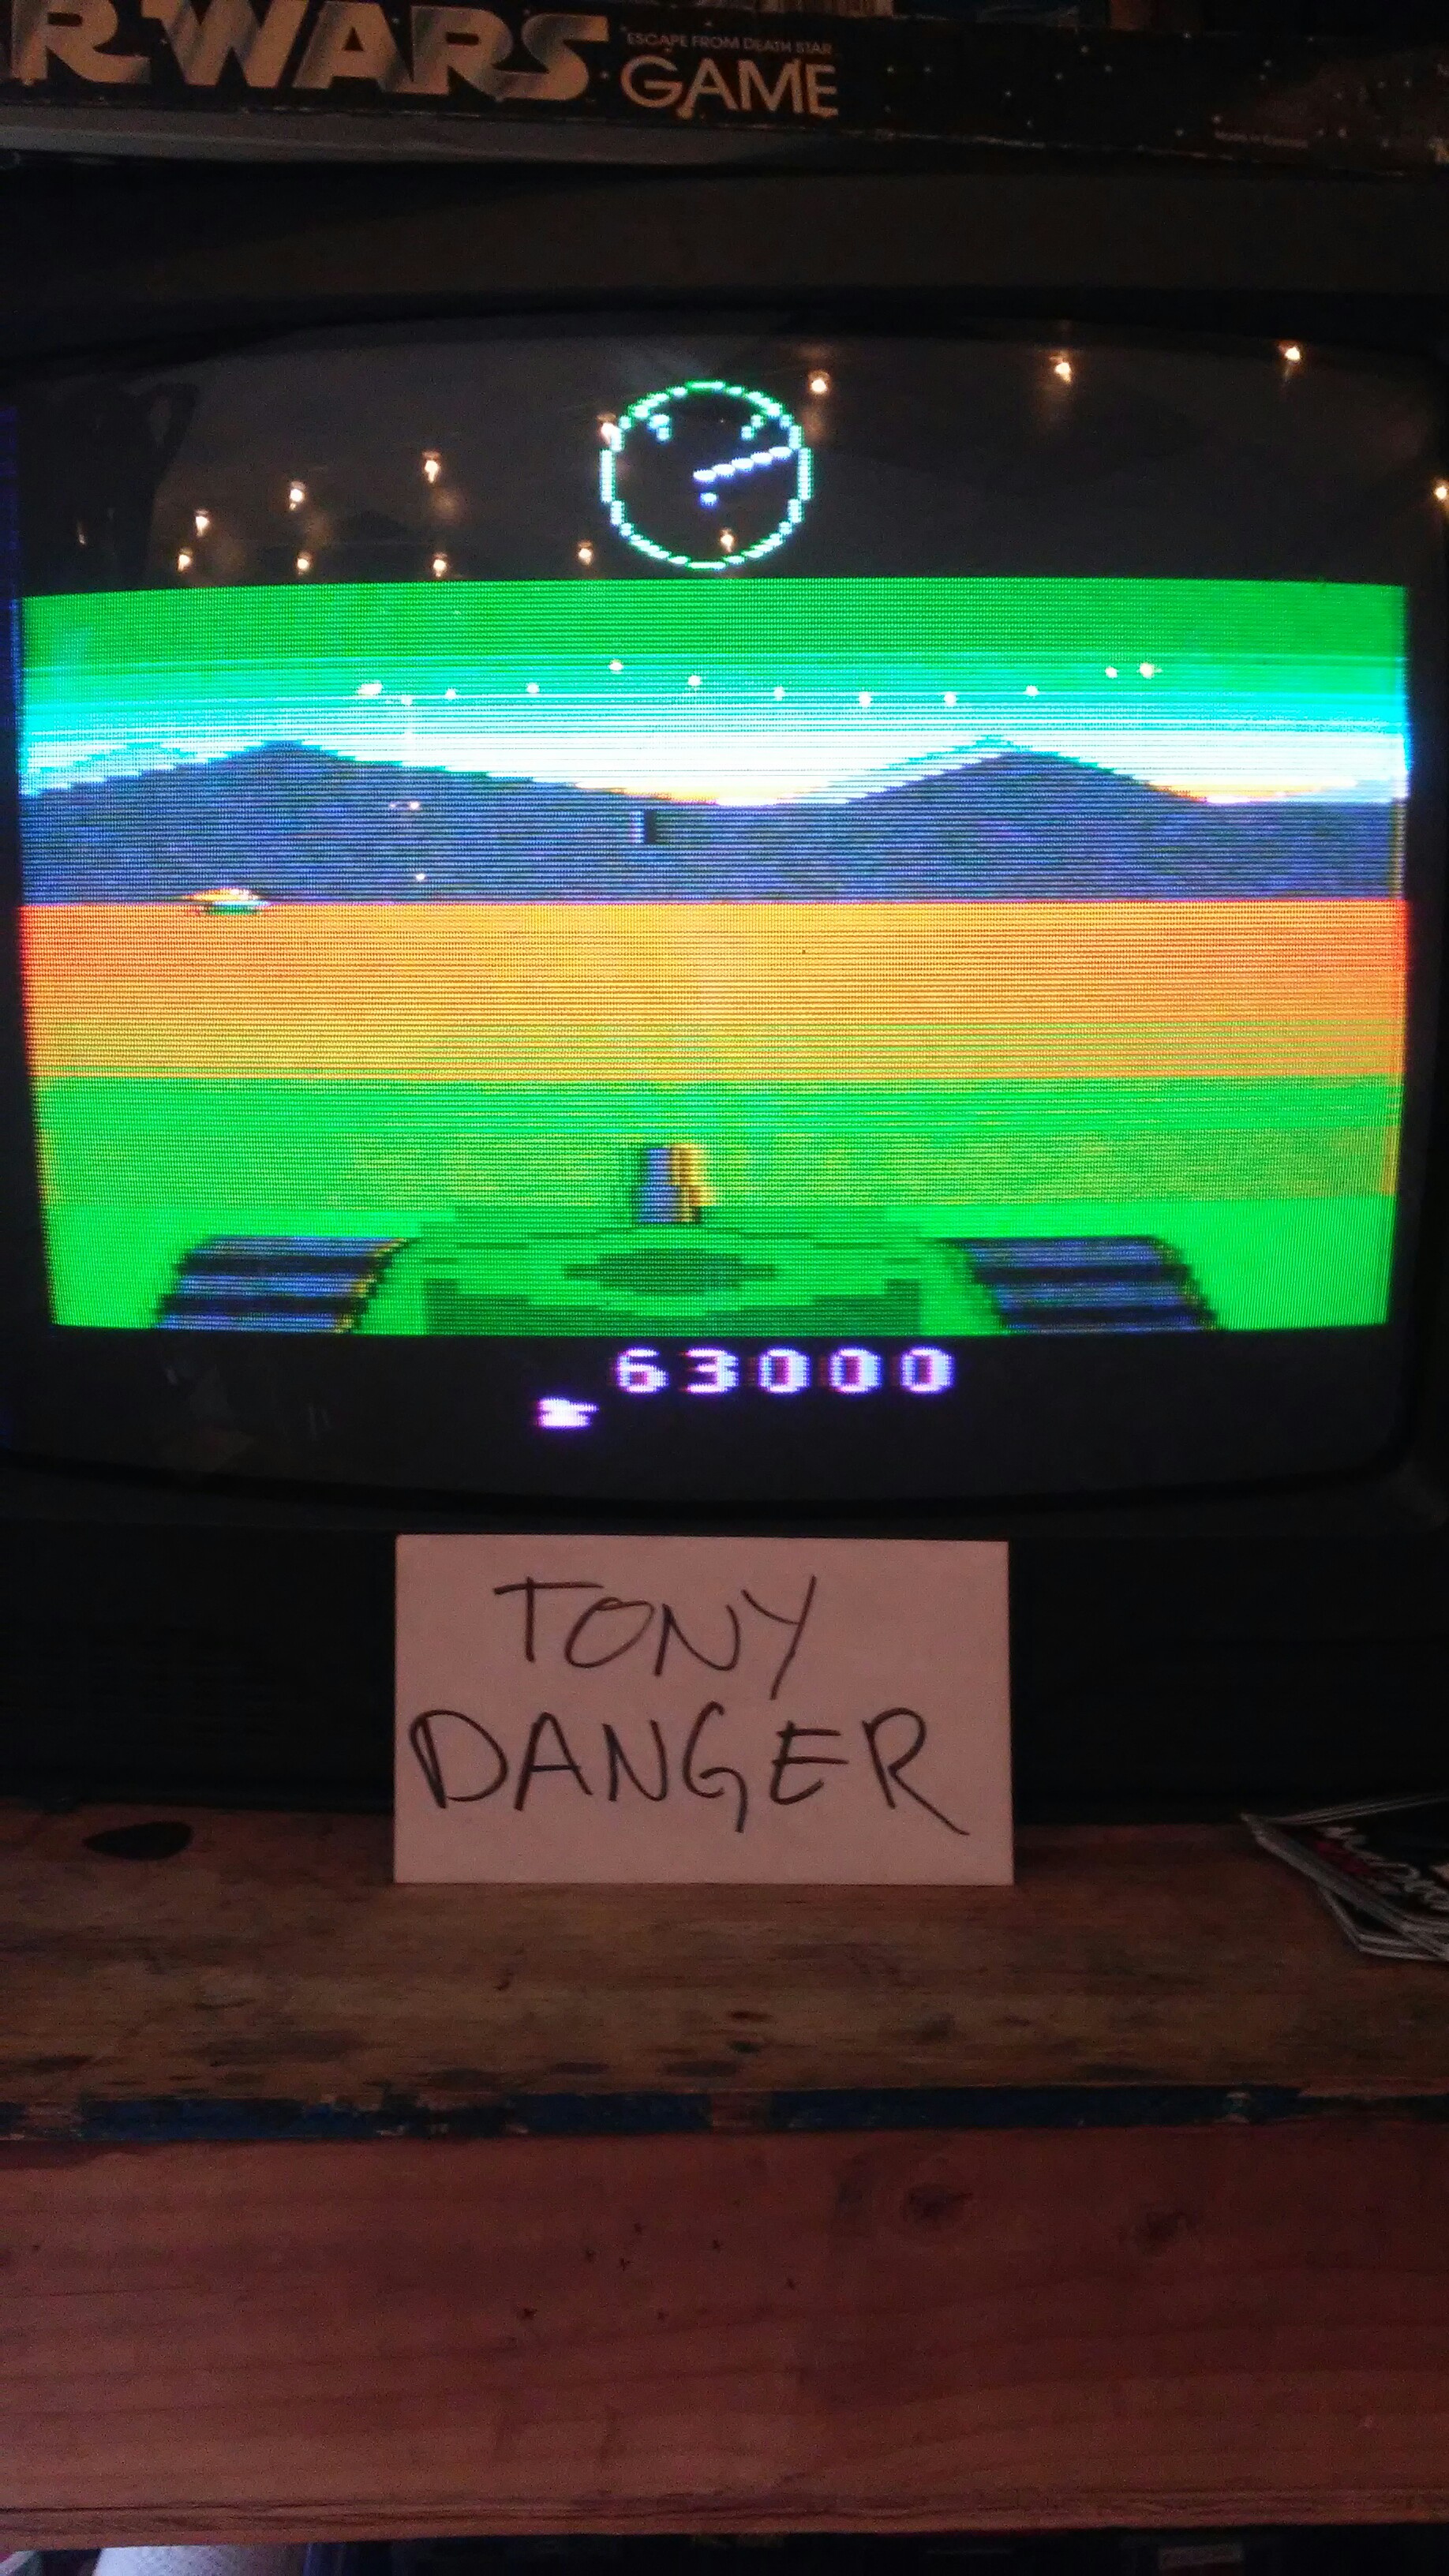 TonyDanger: Battlezone (Atari 2600) 63,000 points on 2017-01-06 14:10:39